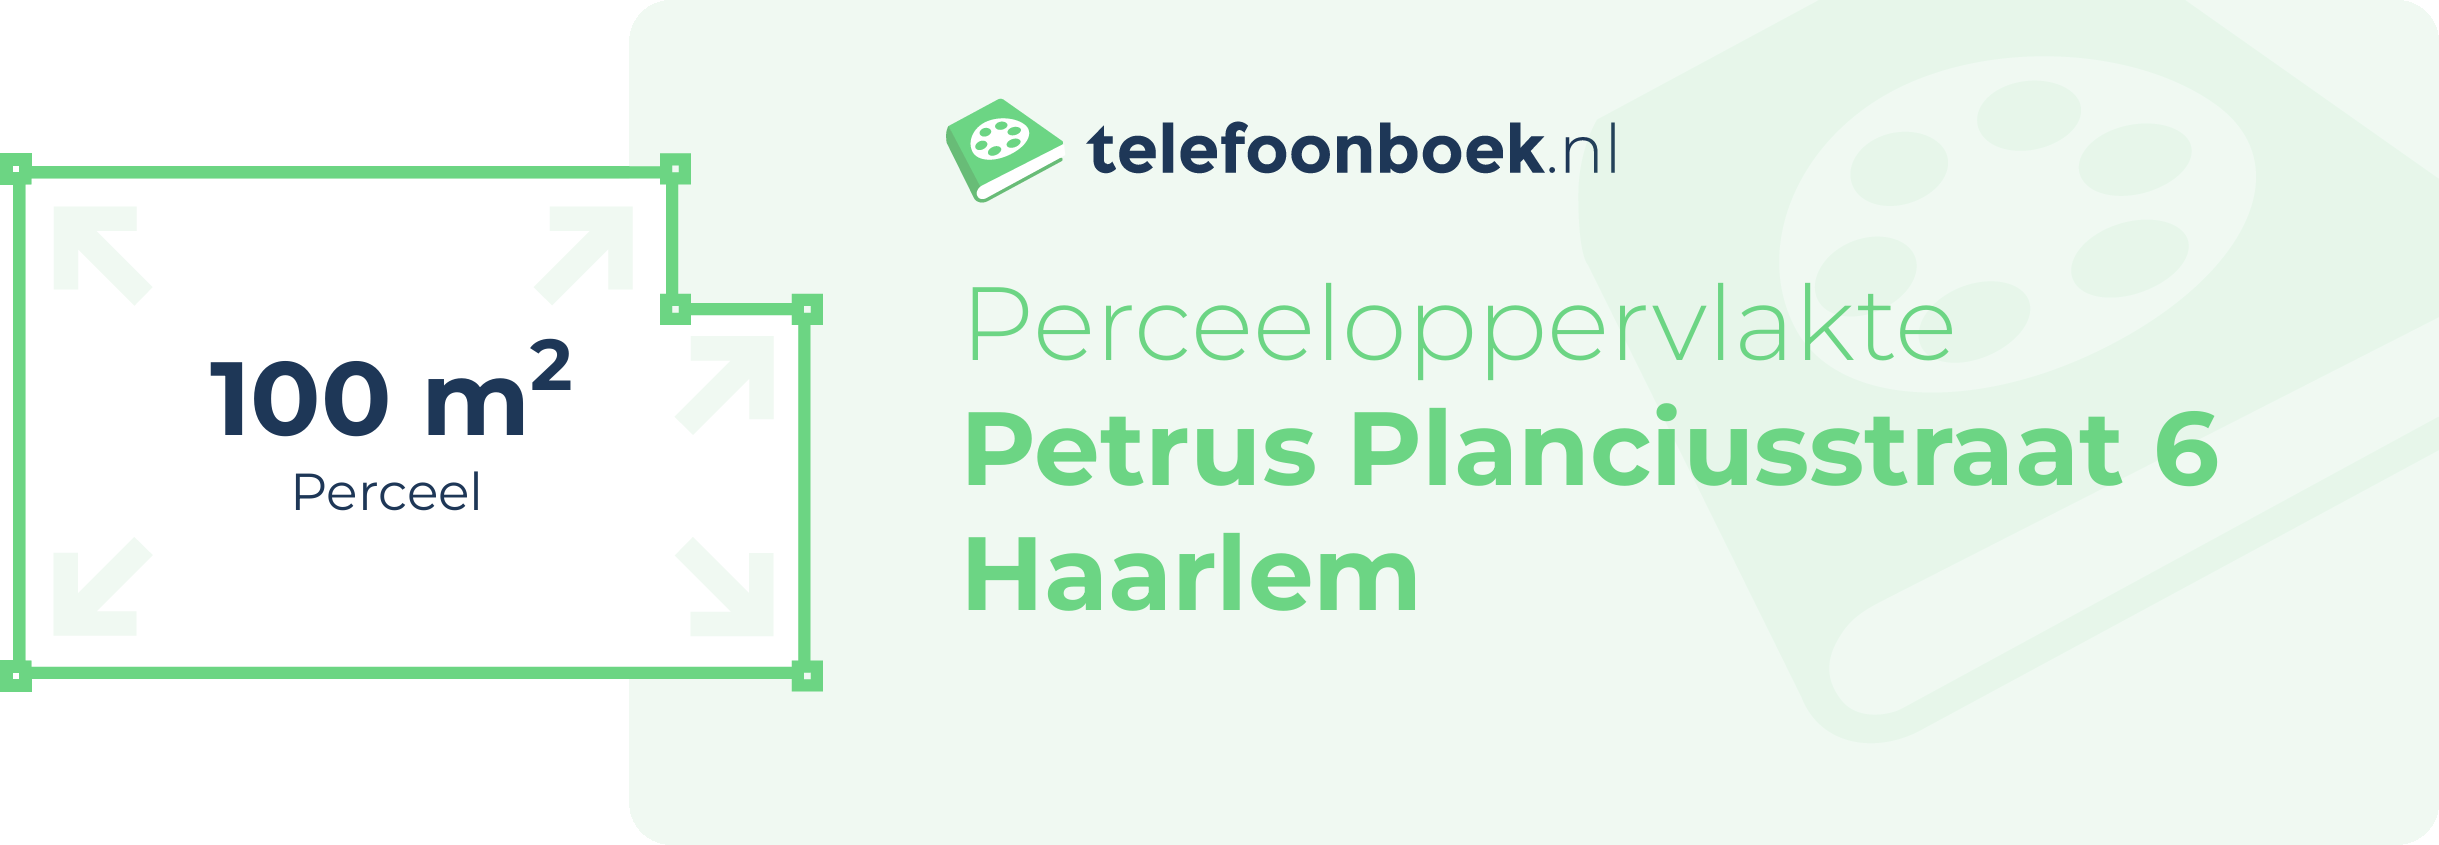 Perceeloppervlakte Petrus Planciusstraat 6 Haarlem